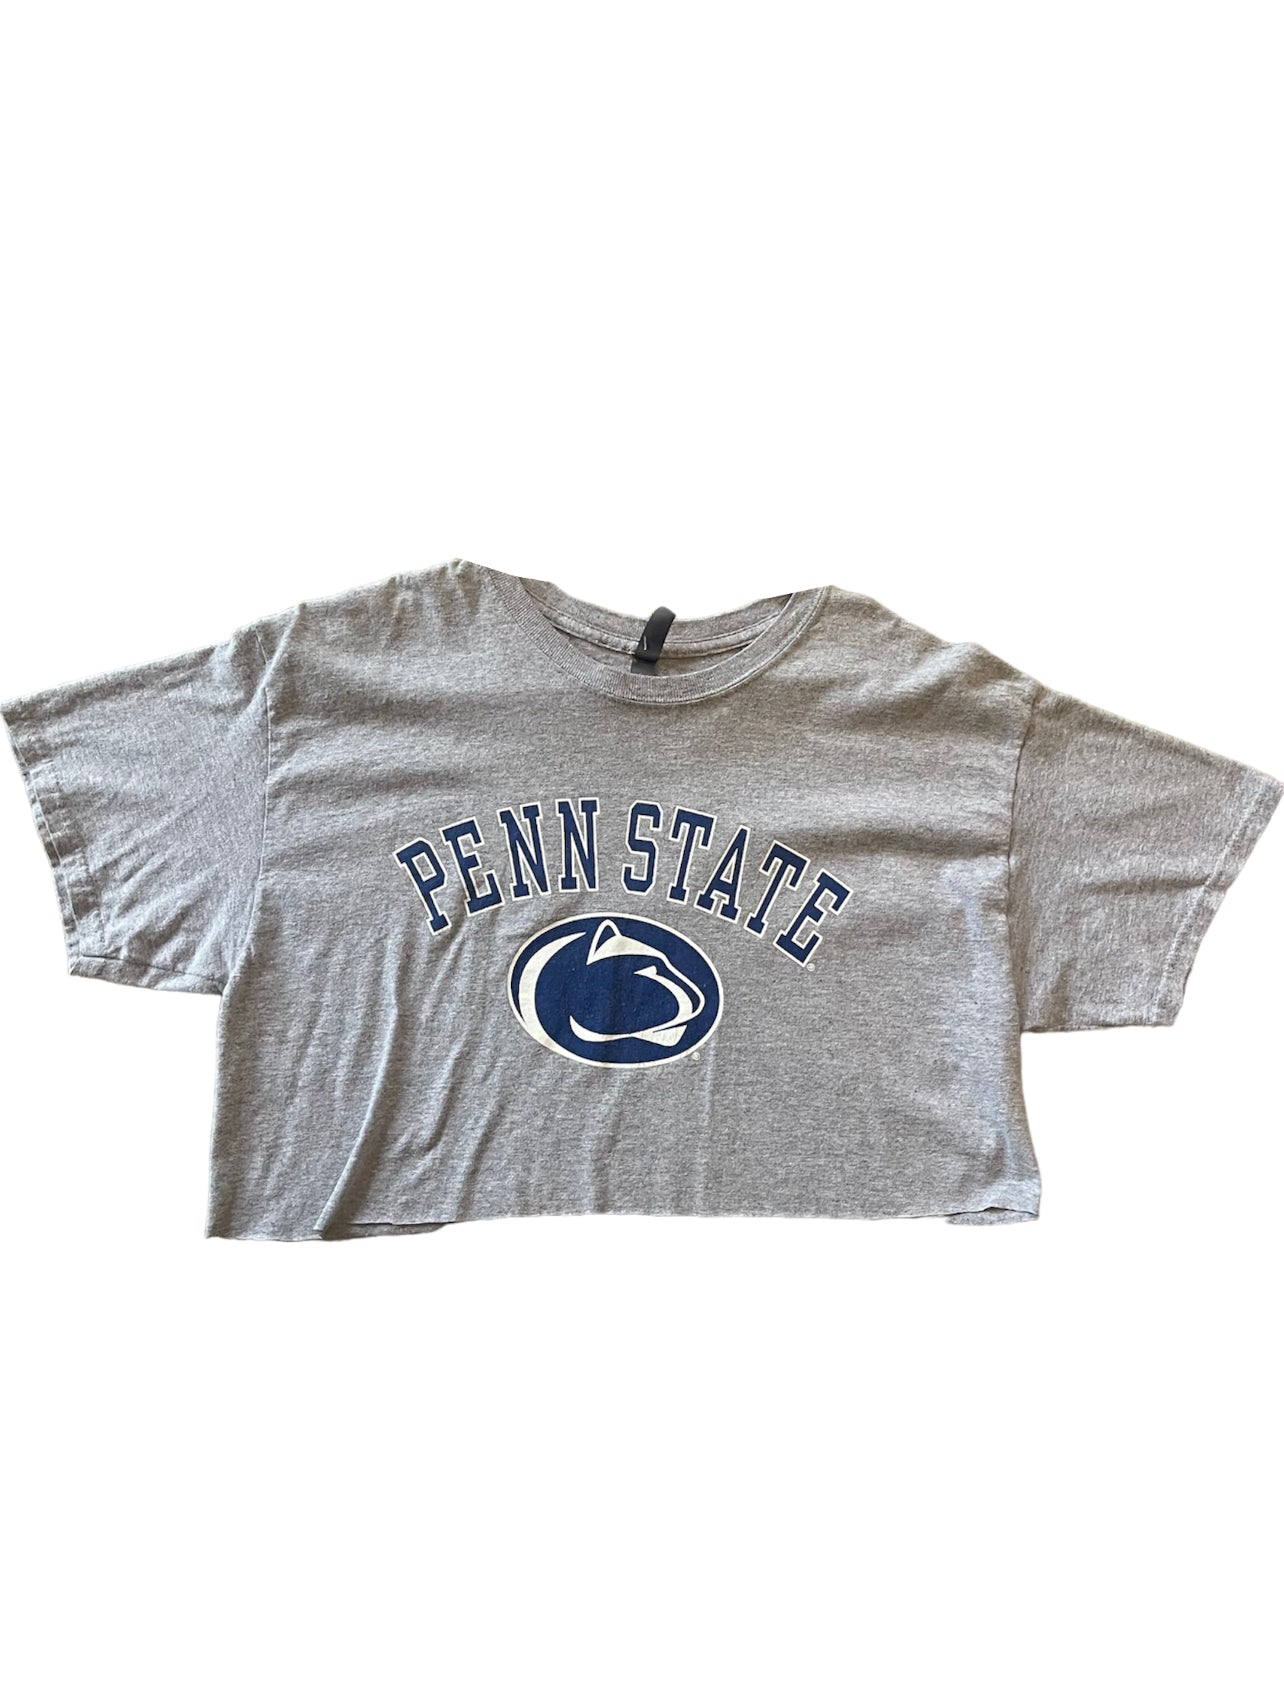 Penn State Crop